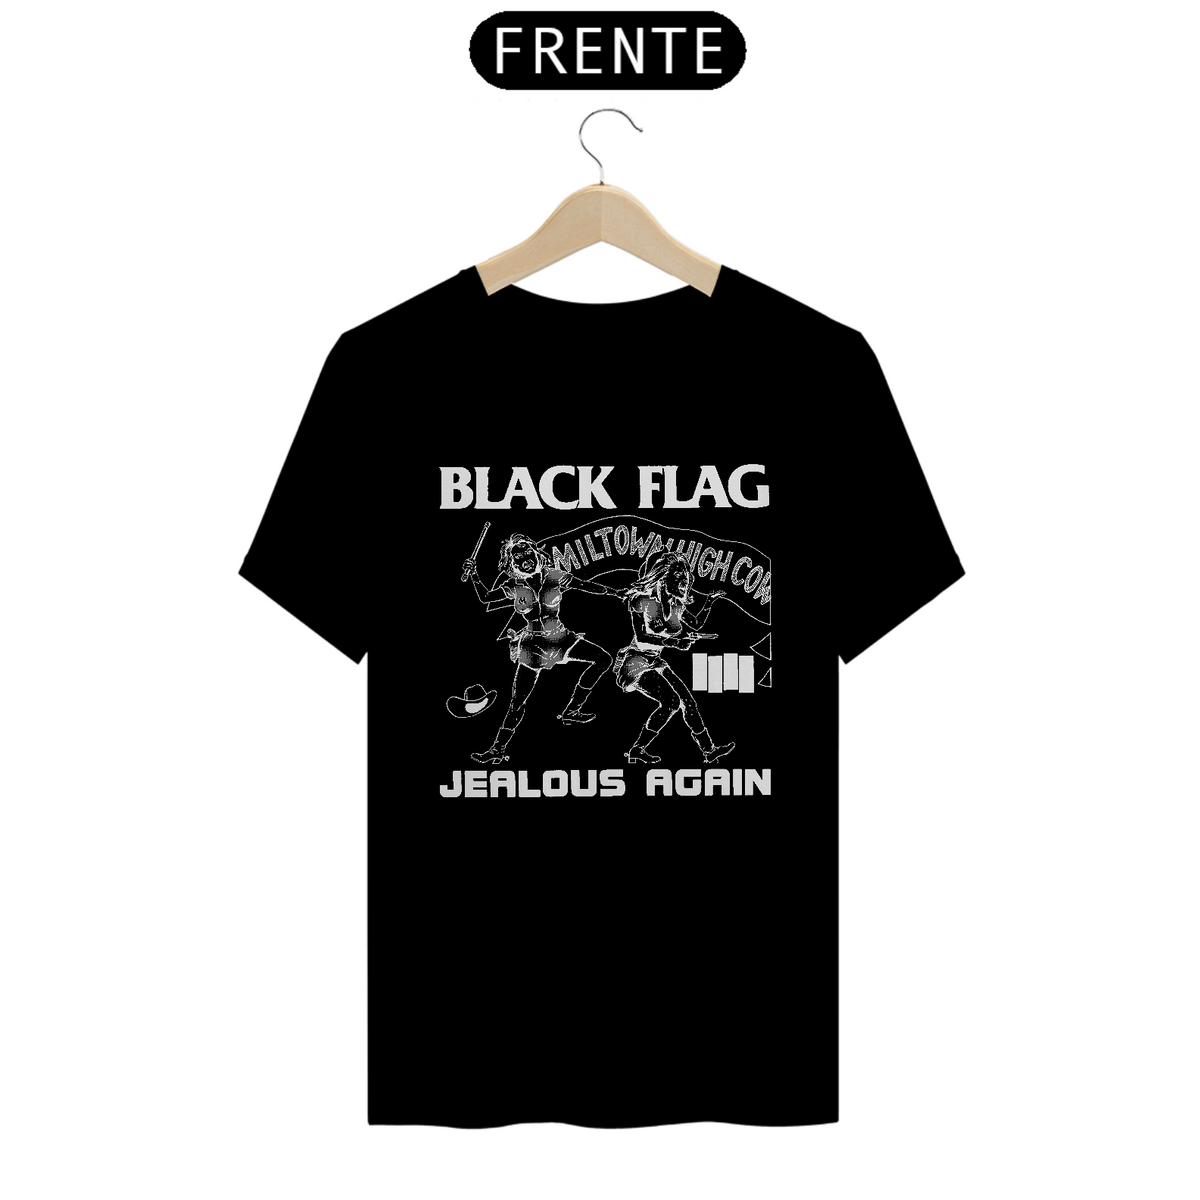 Nome do produto: Black Flag - Jealous Again